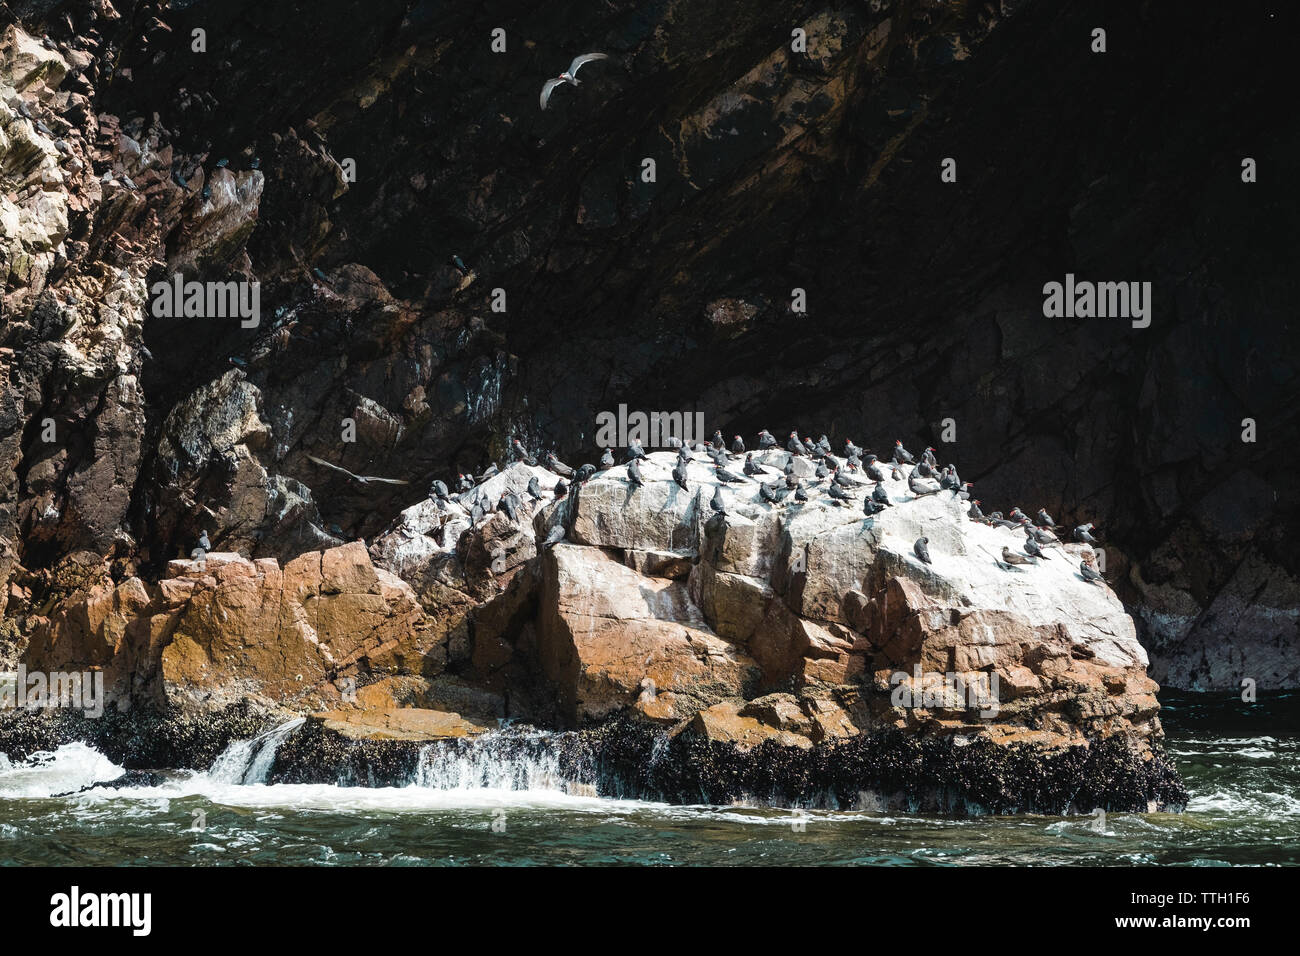 A flock of Inca Terns on a rock formation,Islas Ballestas,Paracas,Peru Stock Photo